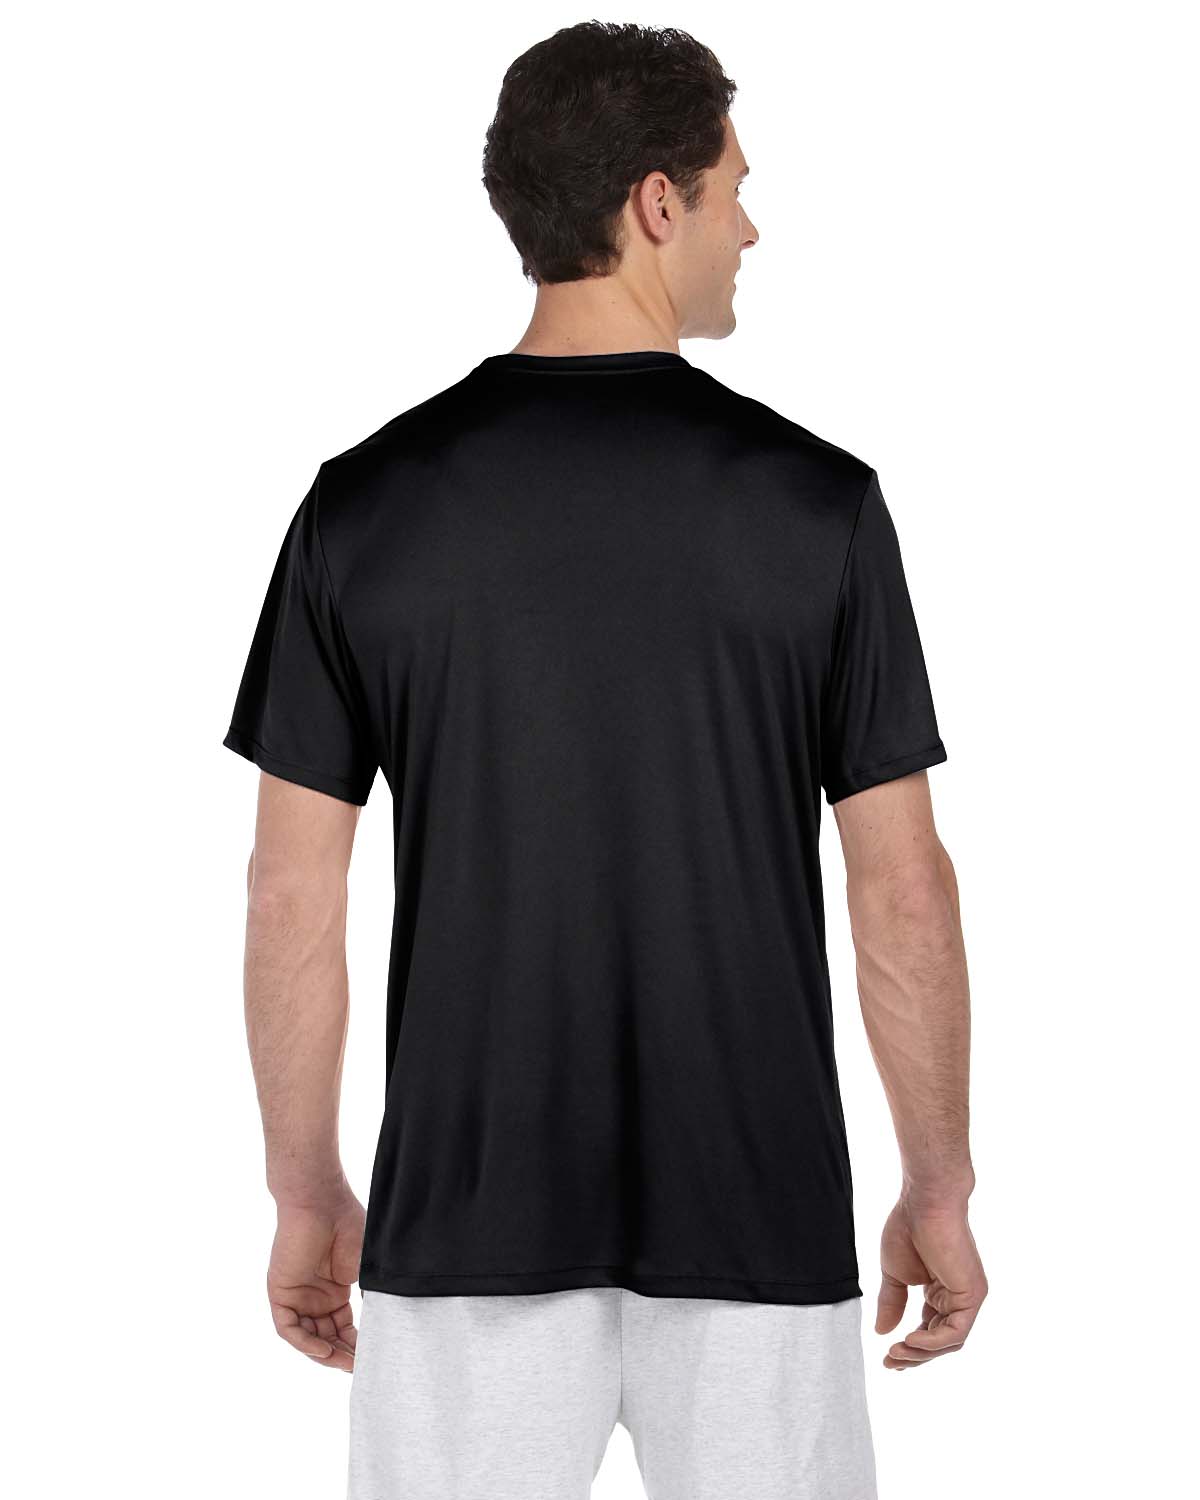 Mens Cool DRI TAGLESS Men's T-Shirt 4820 (2 PACK) - image 3 of 3